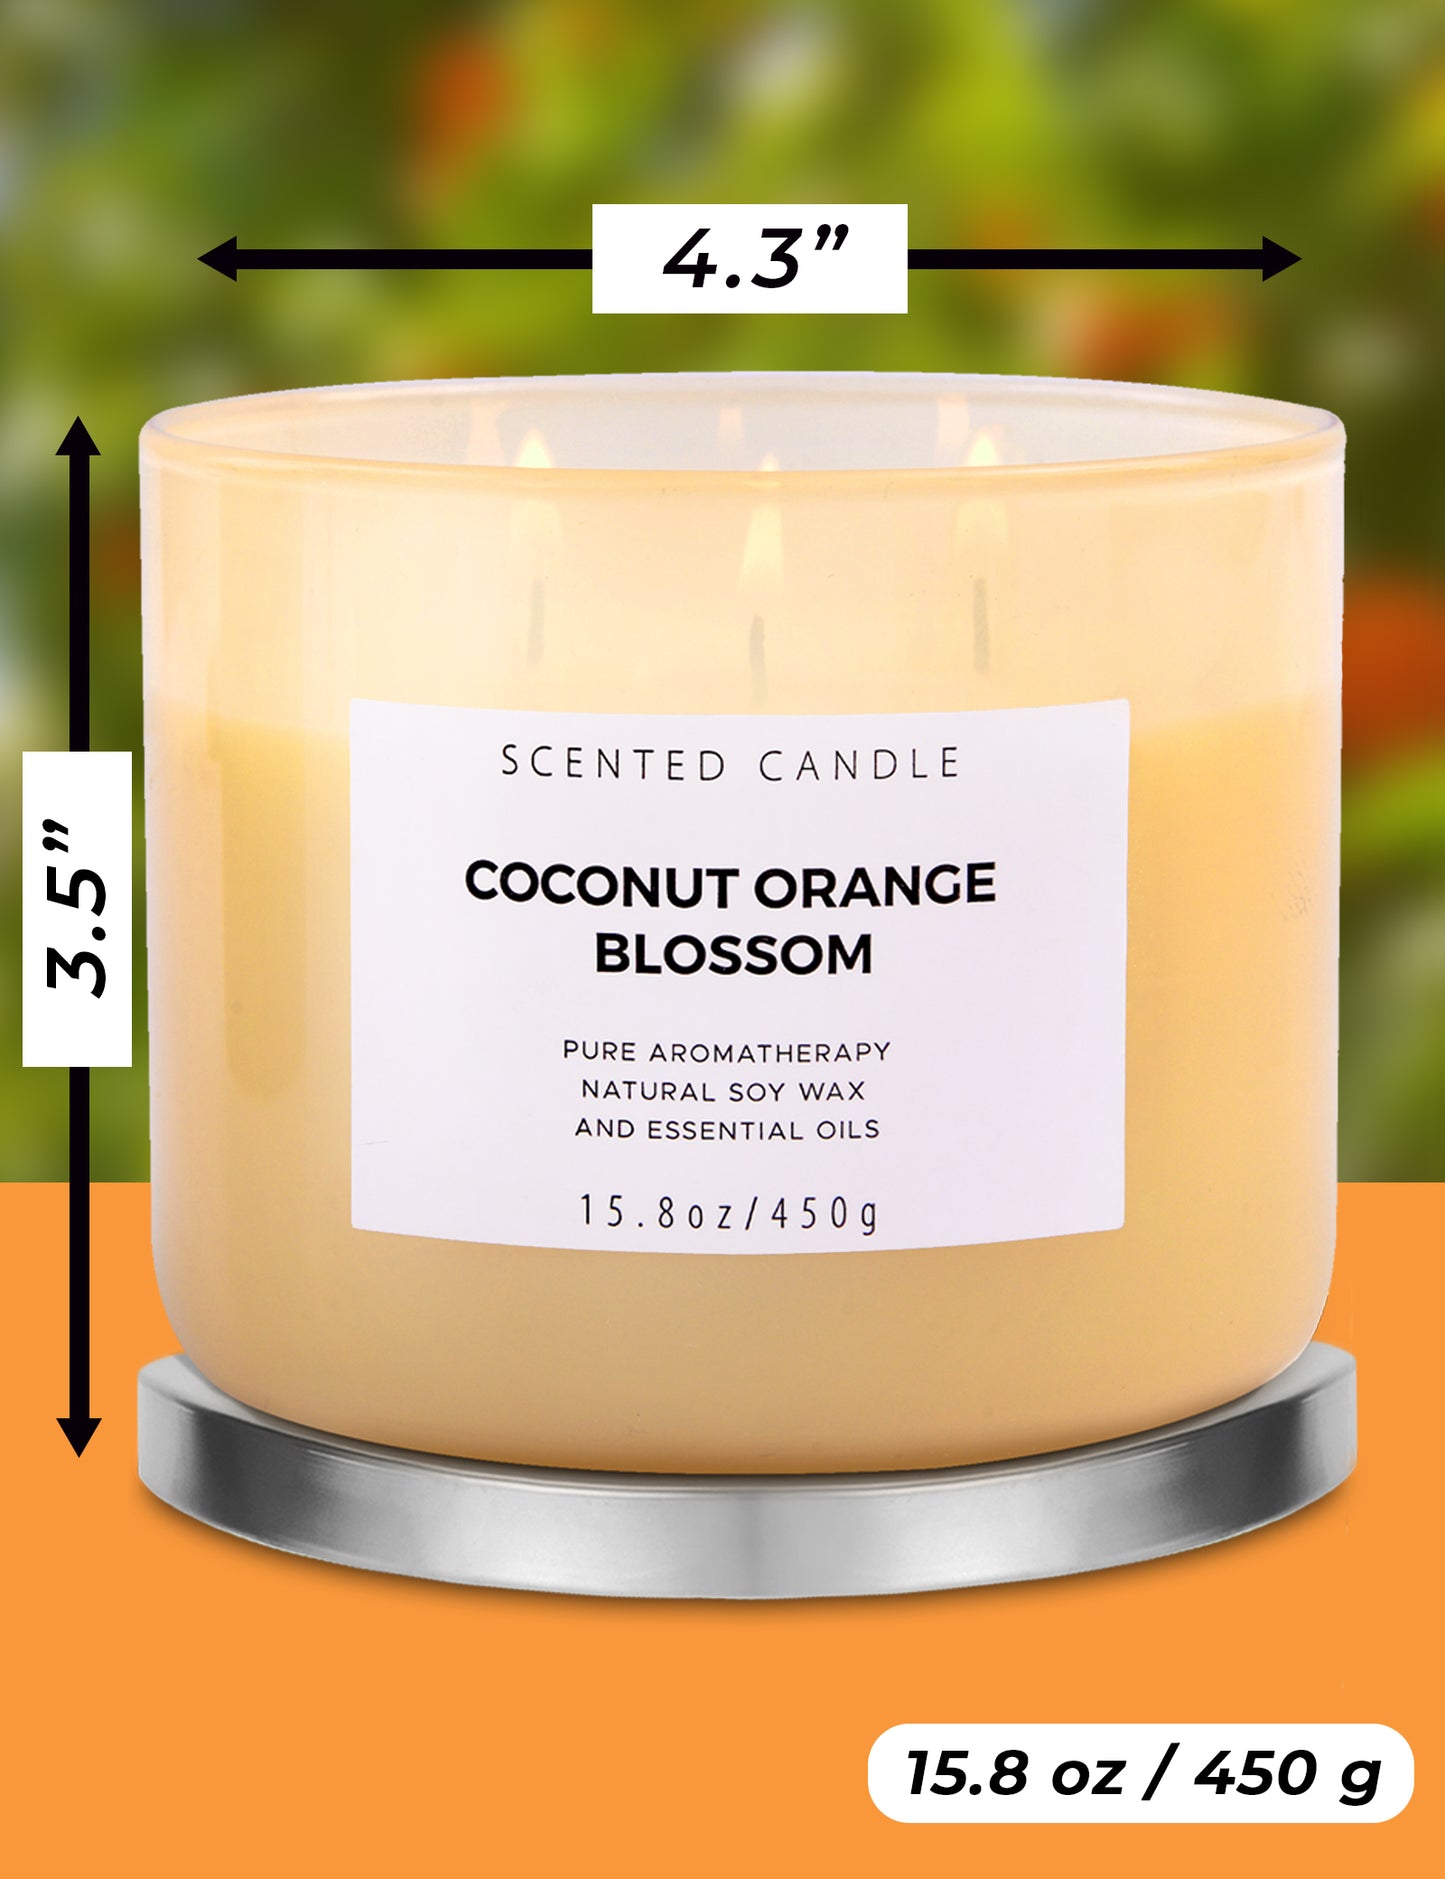 Coconut Orange Blossom Candle